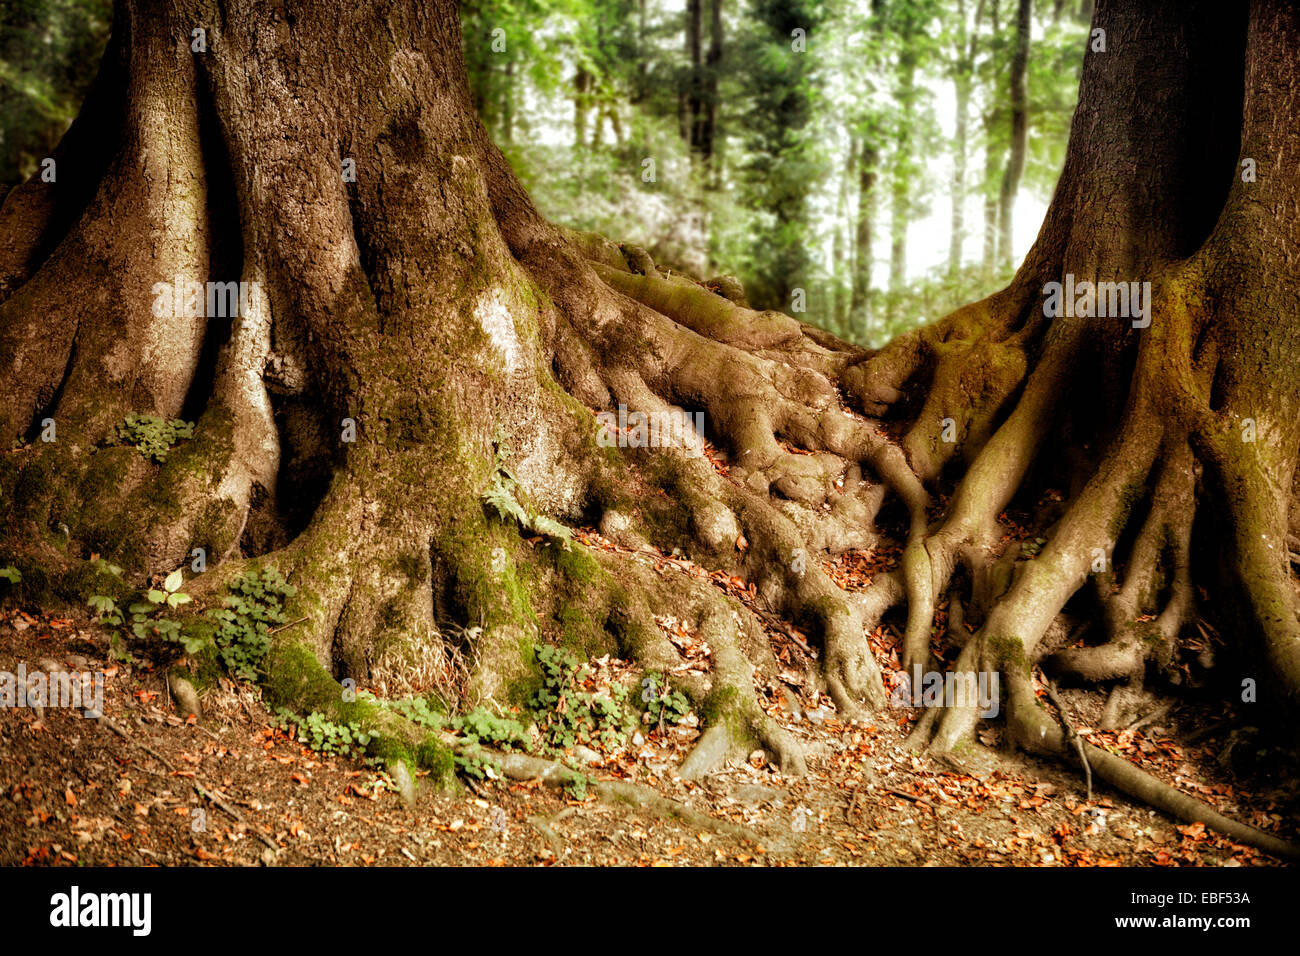 Tree roots, Beech (Fagus sp.), Nature reserve Felsenmeer, Hemer, Sauerland region, North Rhine-Westphalia, Germany, Europe Stock Photo